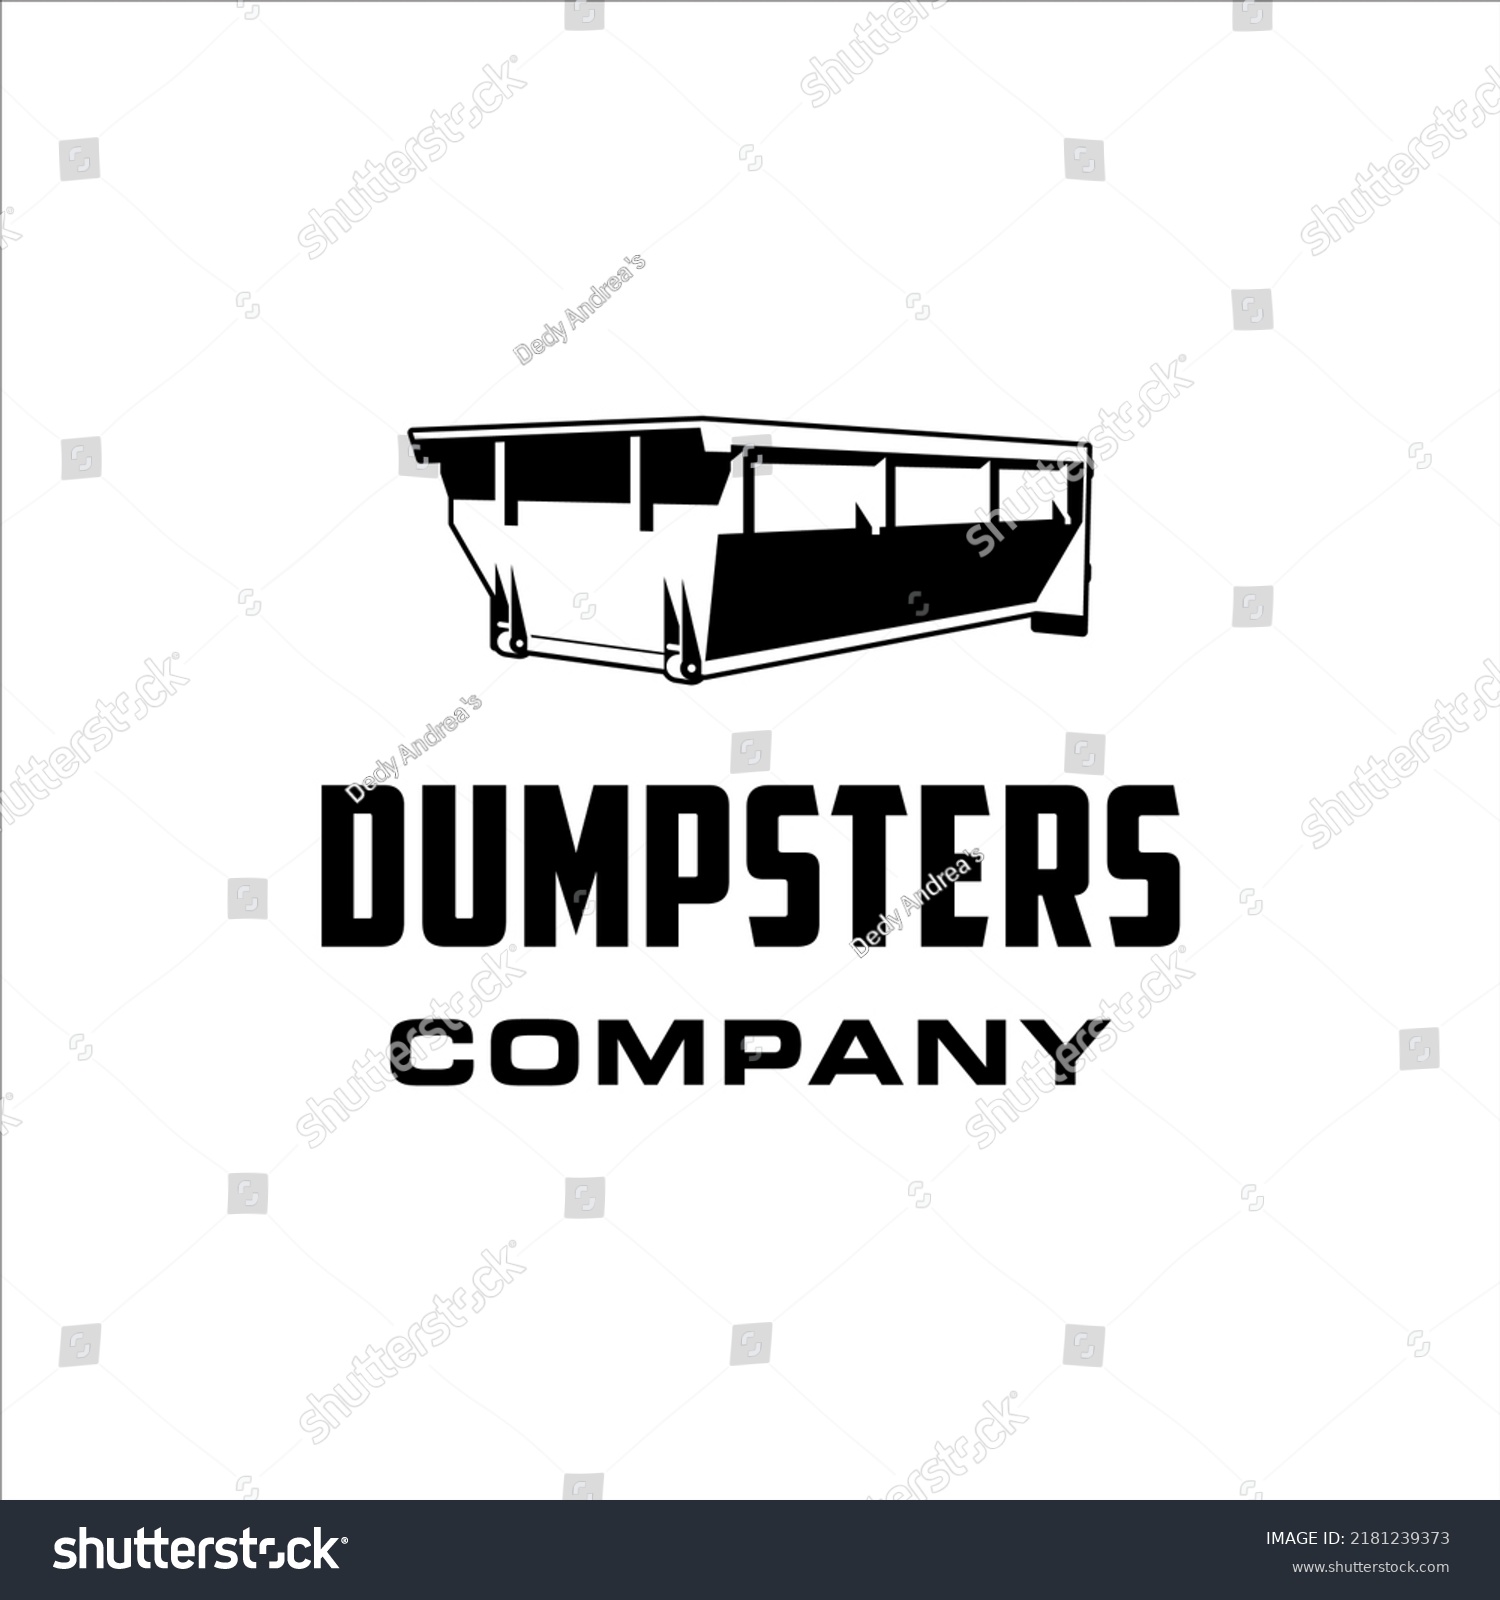 SVG of Dumpster company logo with elegant style design svg